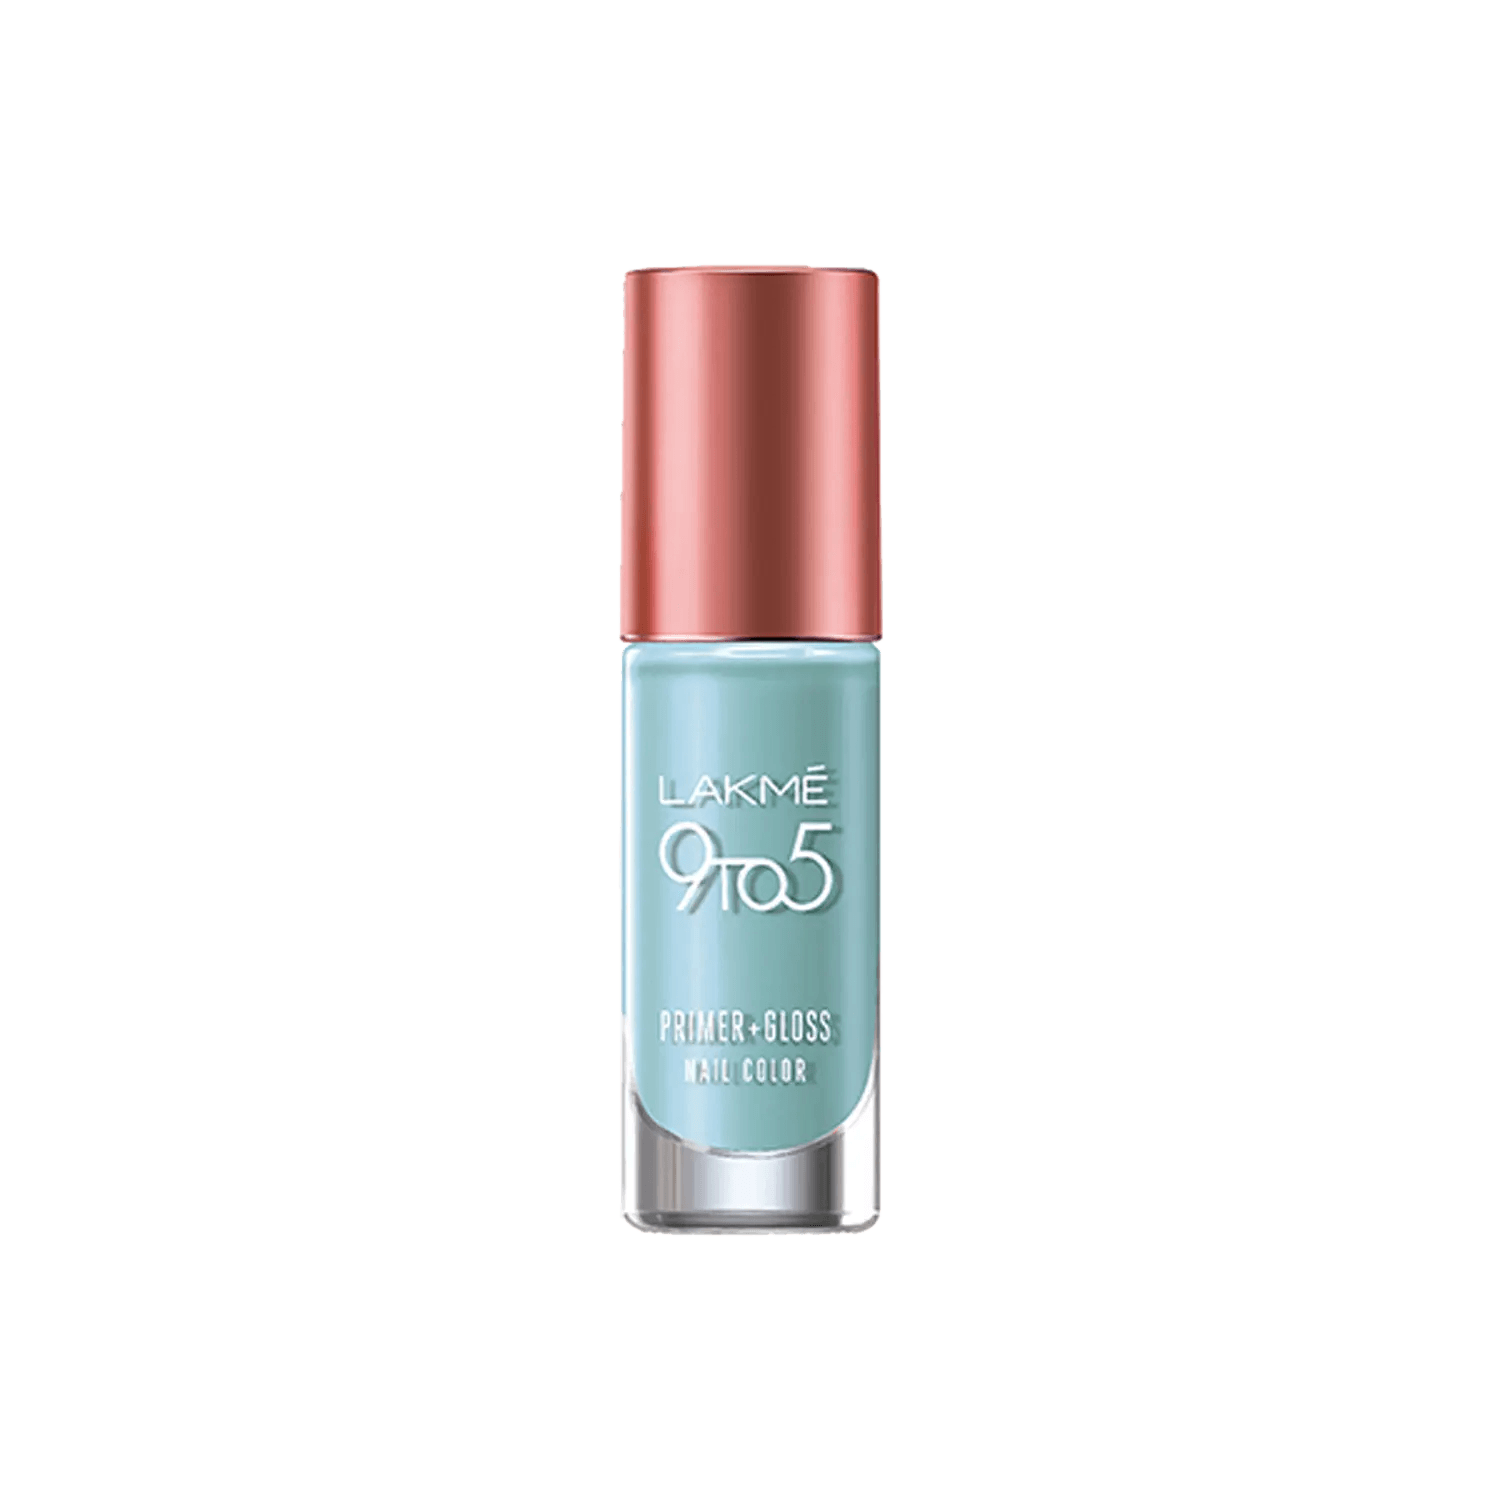 Lakme | Lakme 9To5 Primer + Gloss Nail Color - Blue Scape (6ml)